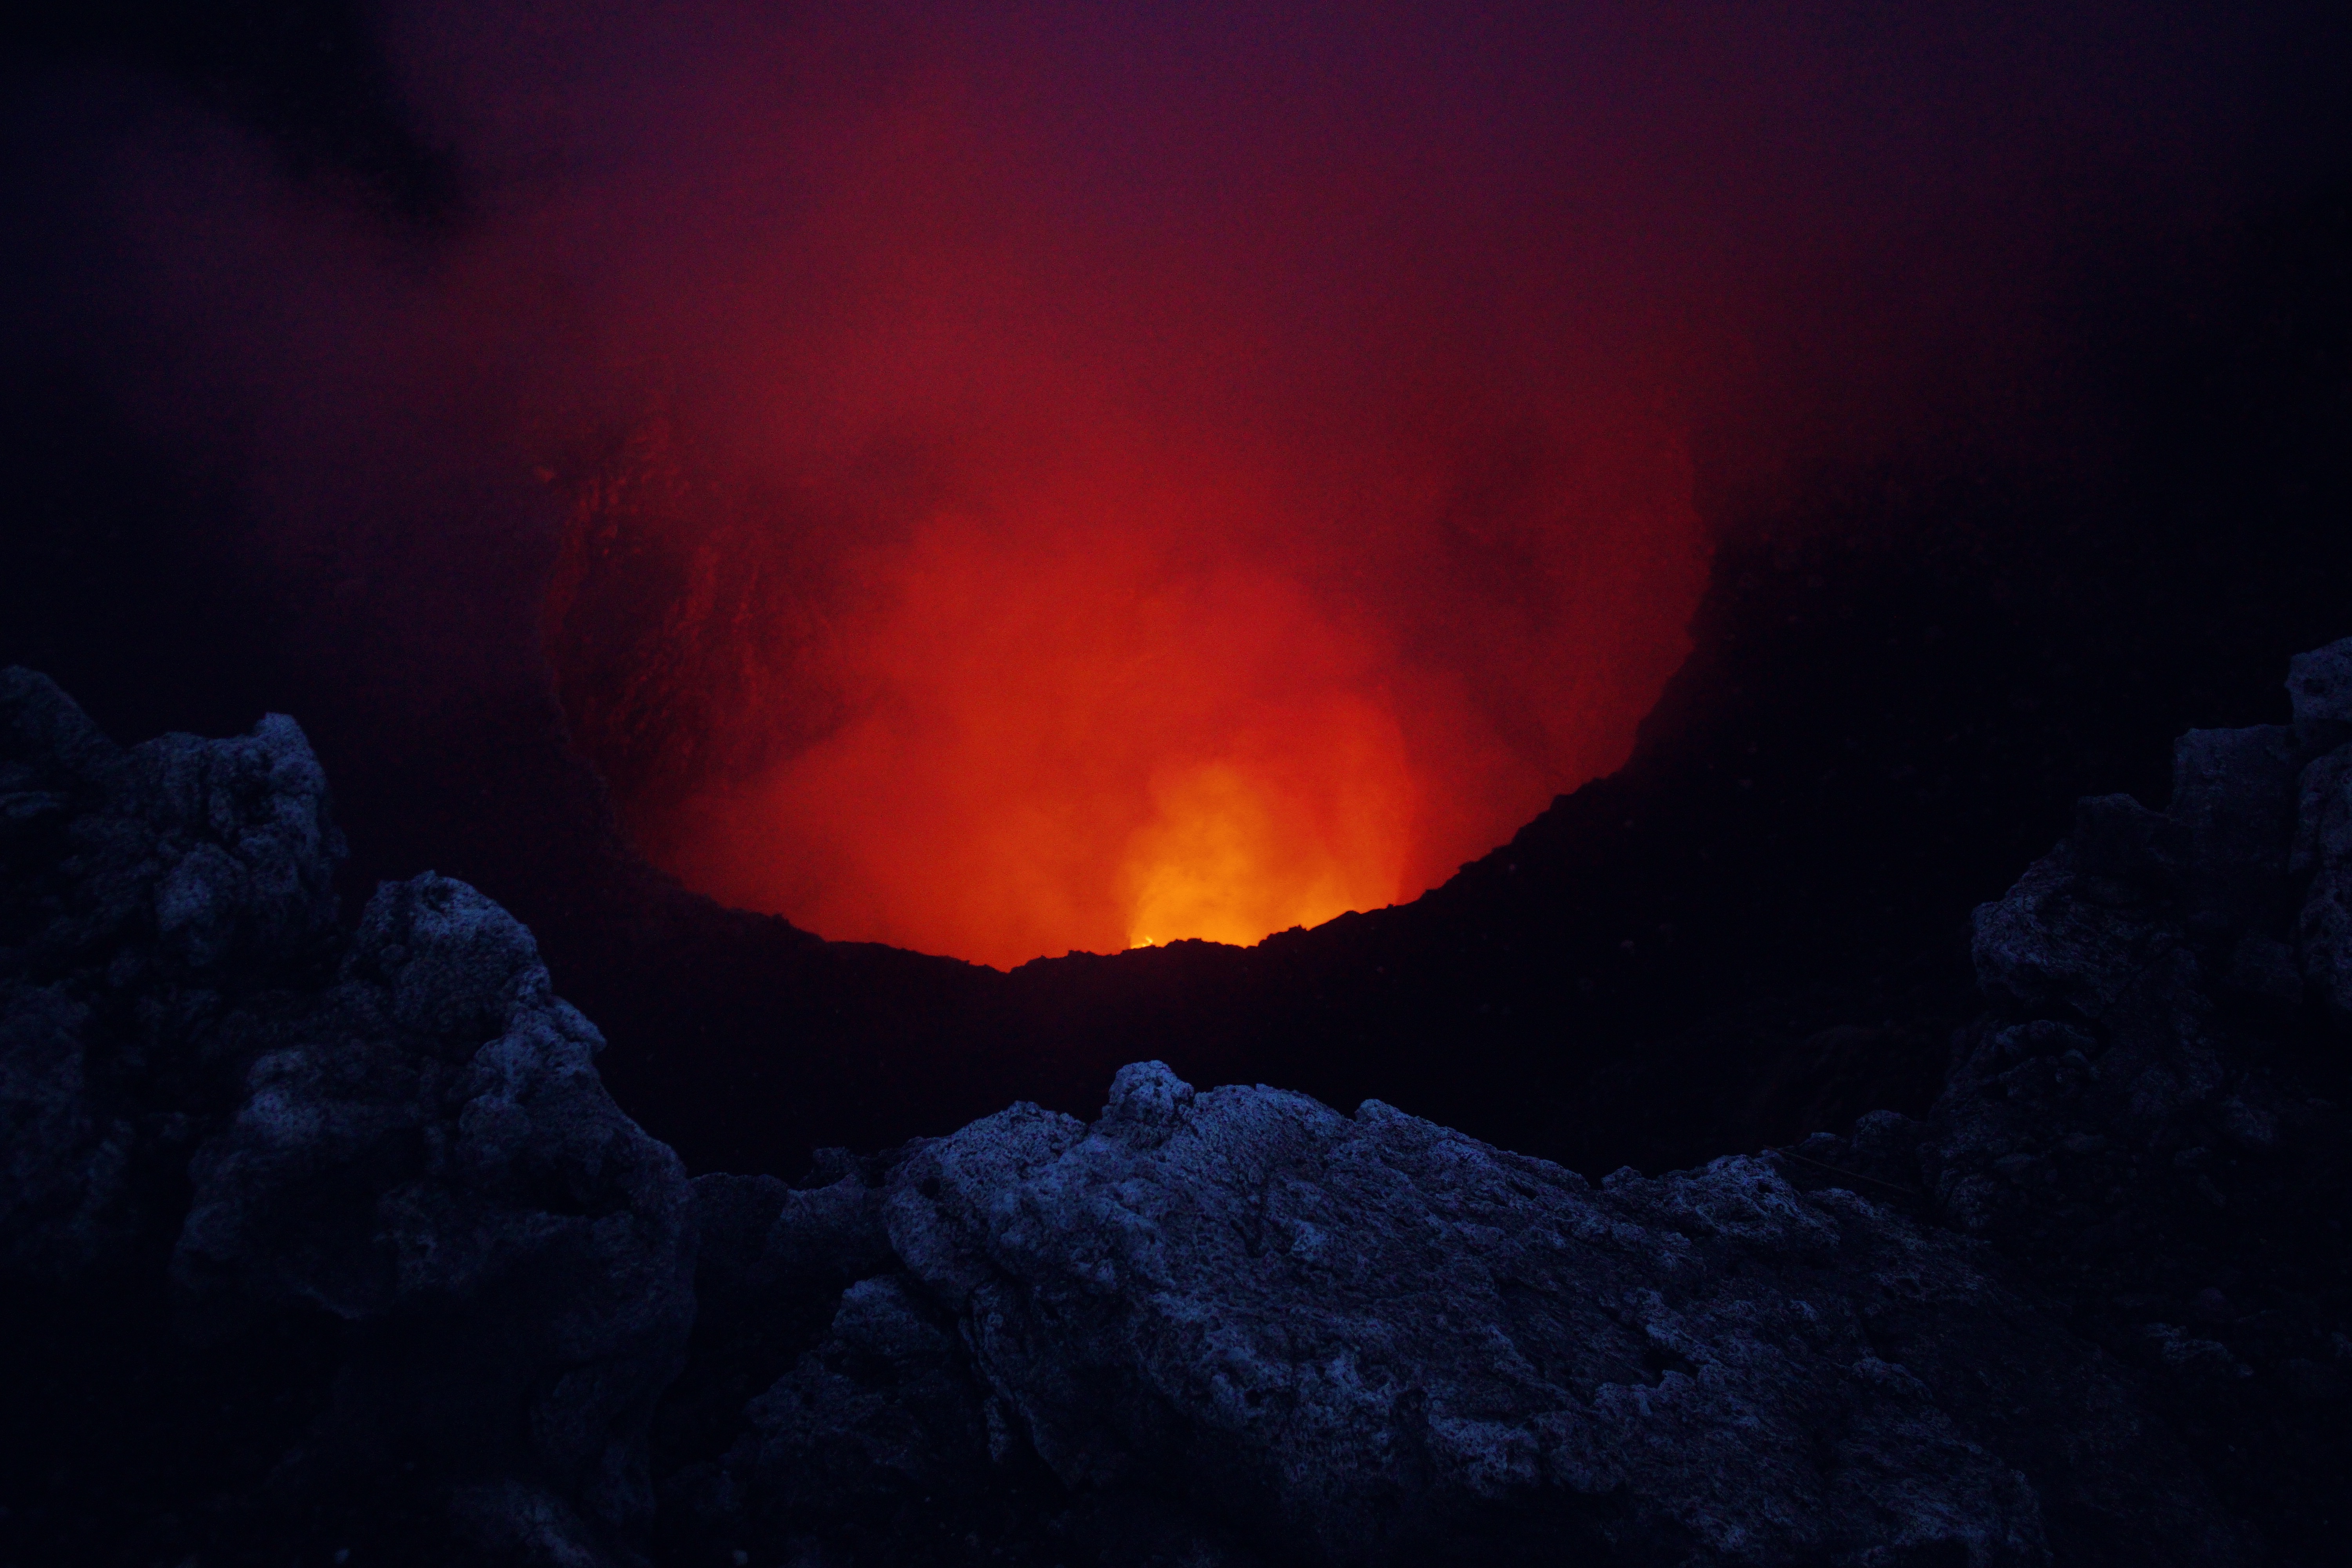 51611 Bild herunterladen natur, masaya, vulkan, lava, nicaragua - Hintergrundbilder und Bildschirmschoner kostenlos